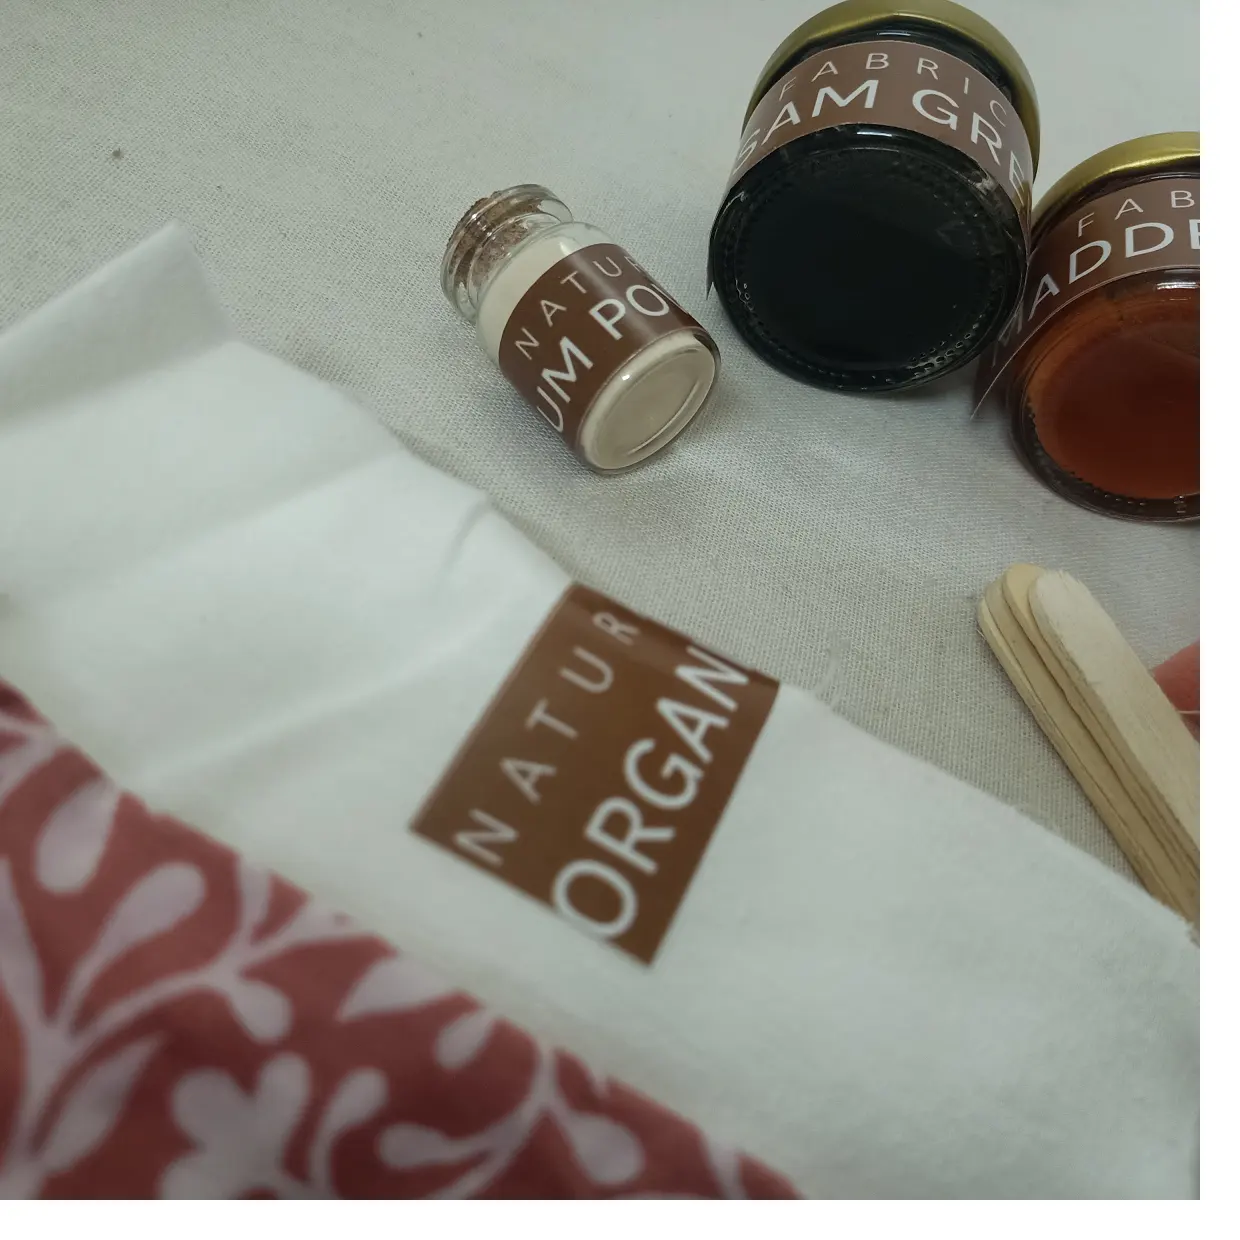 Tintura de tecido natural personalizada, tintura com pasta natural na paleta fria, kit completo para artistas têxteis